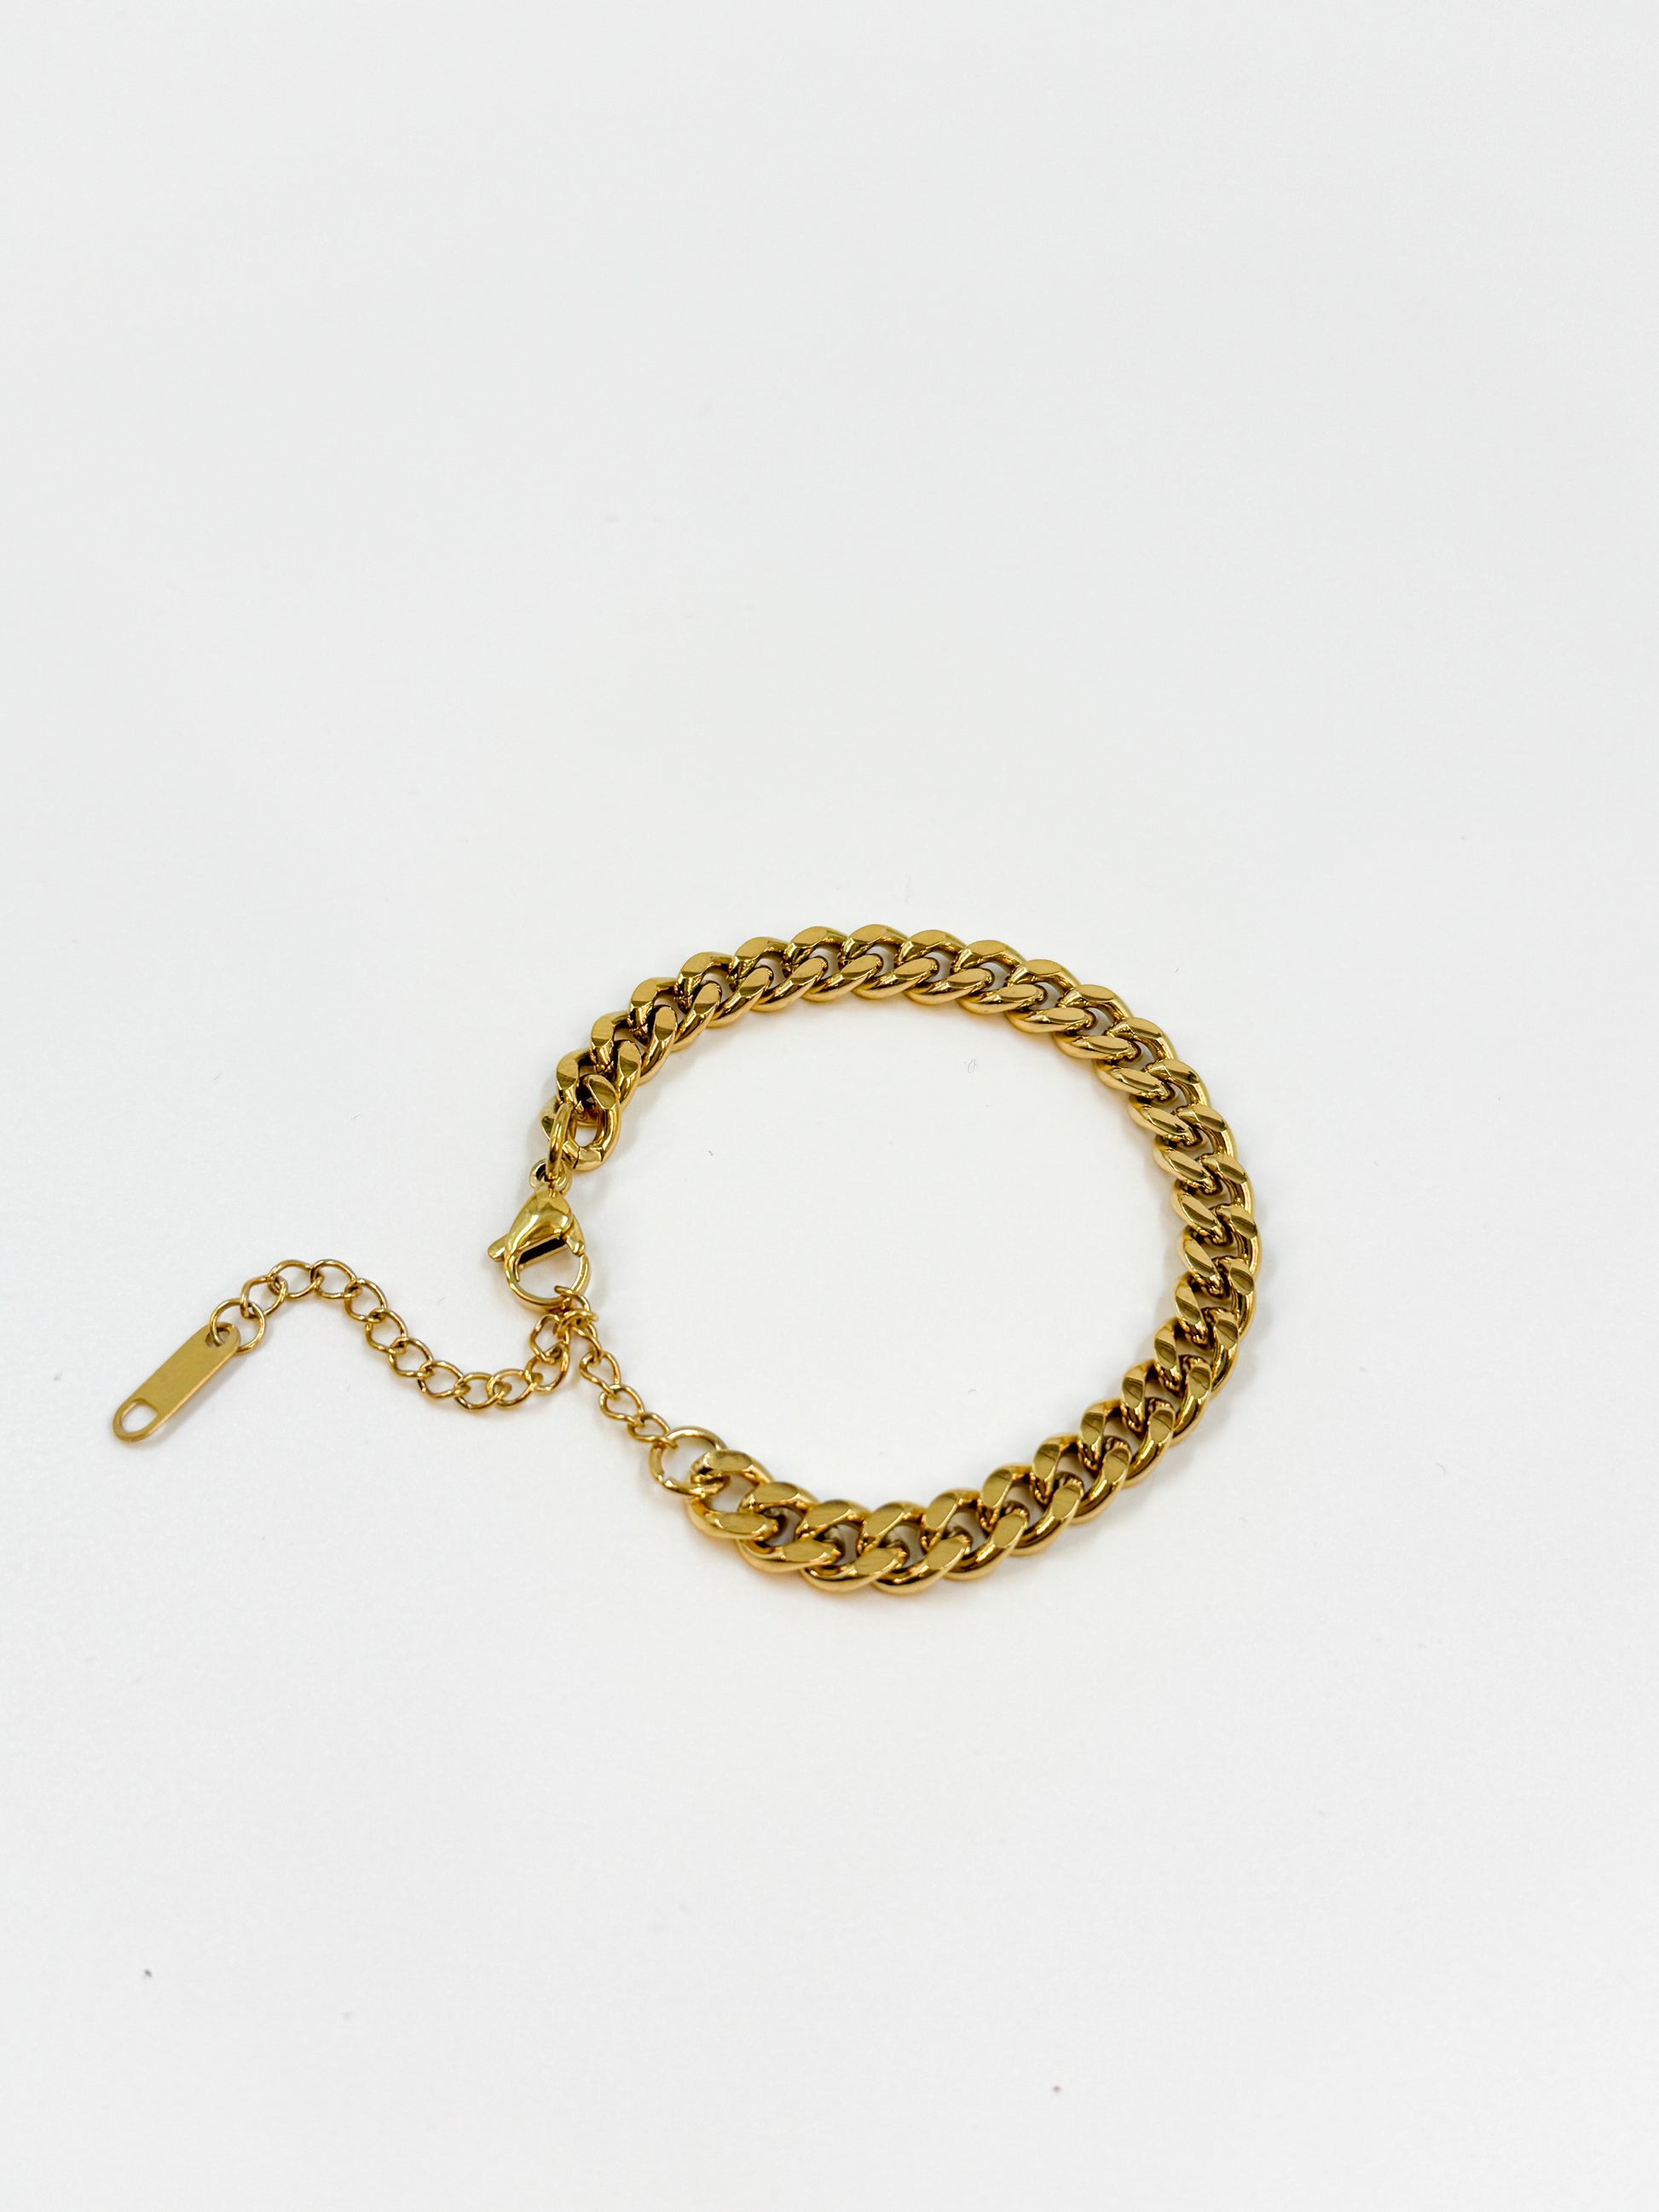 cuban link style bracelet 